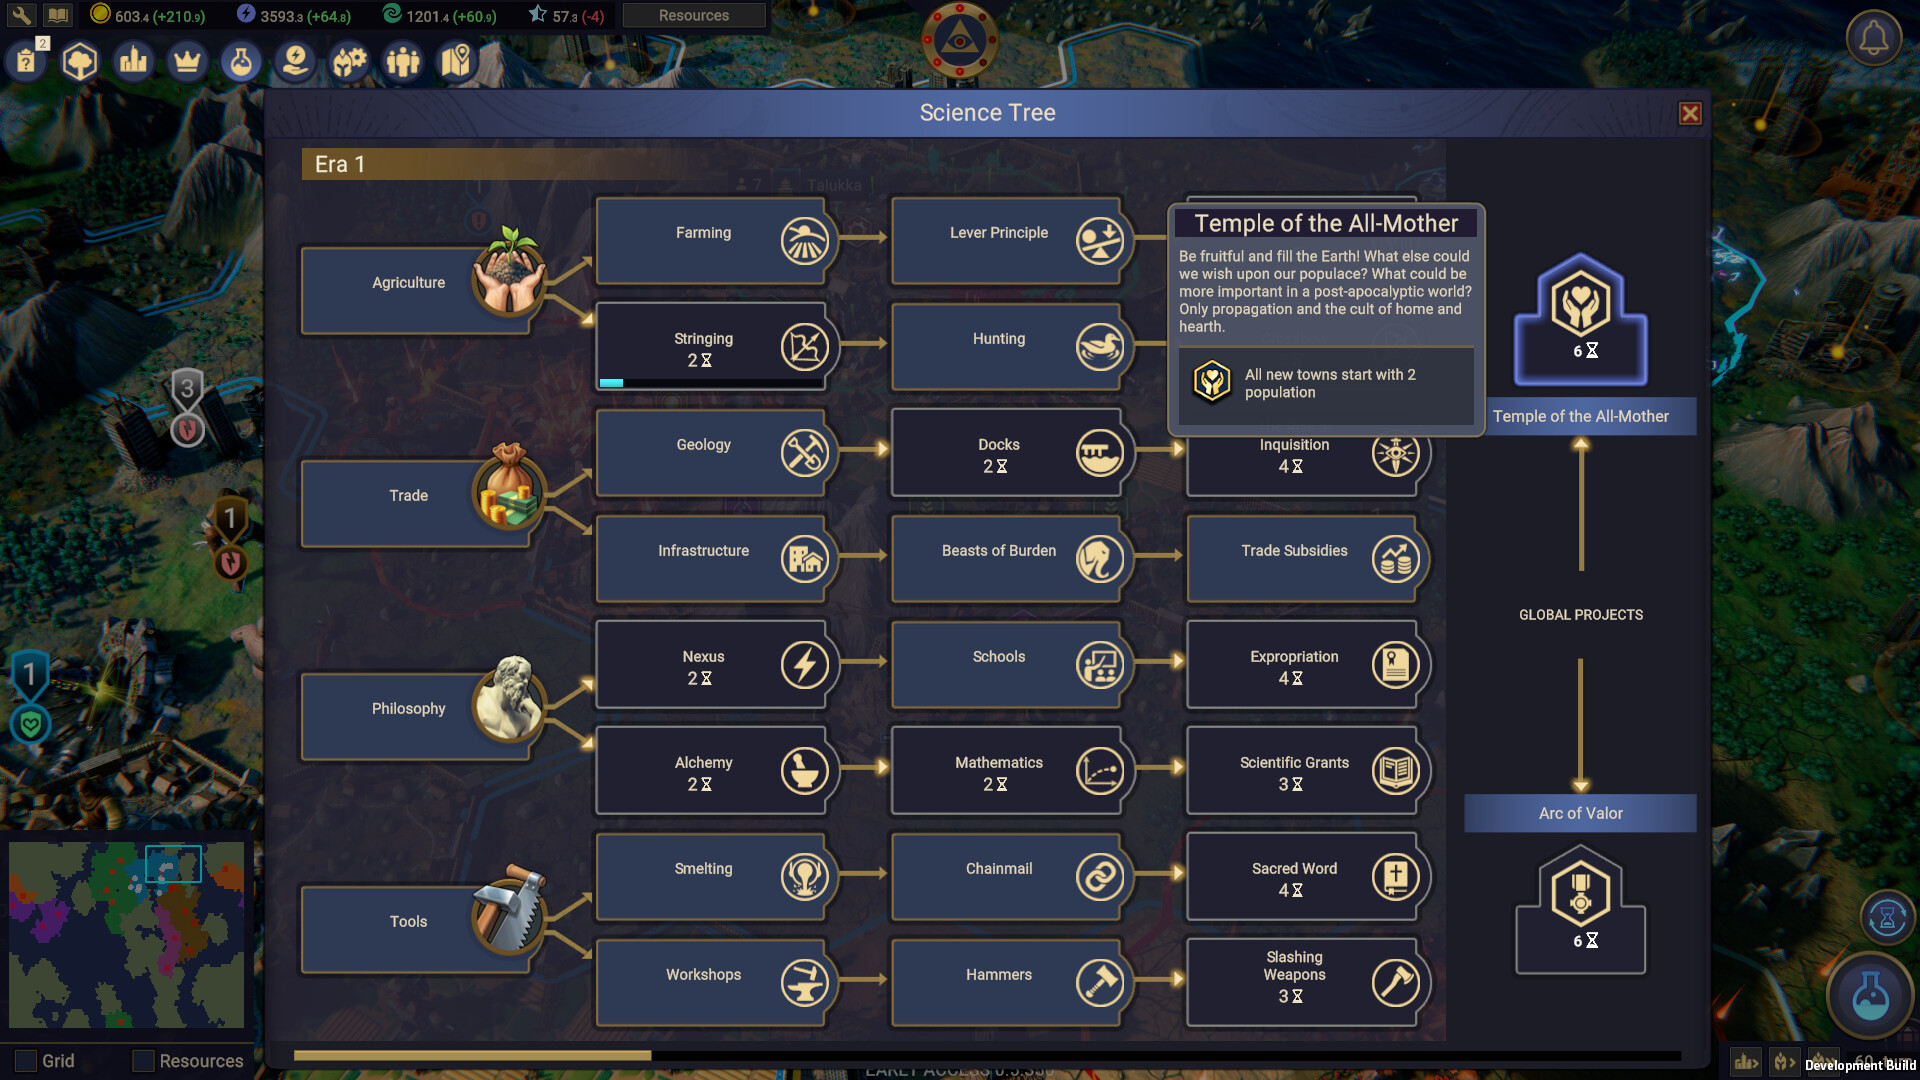 4X回合战略游戏《废土帝国：人类复兴》现已在Steam平台正式发售